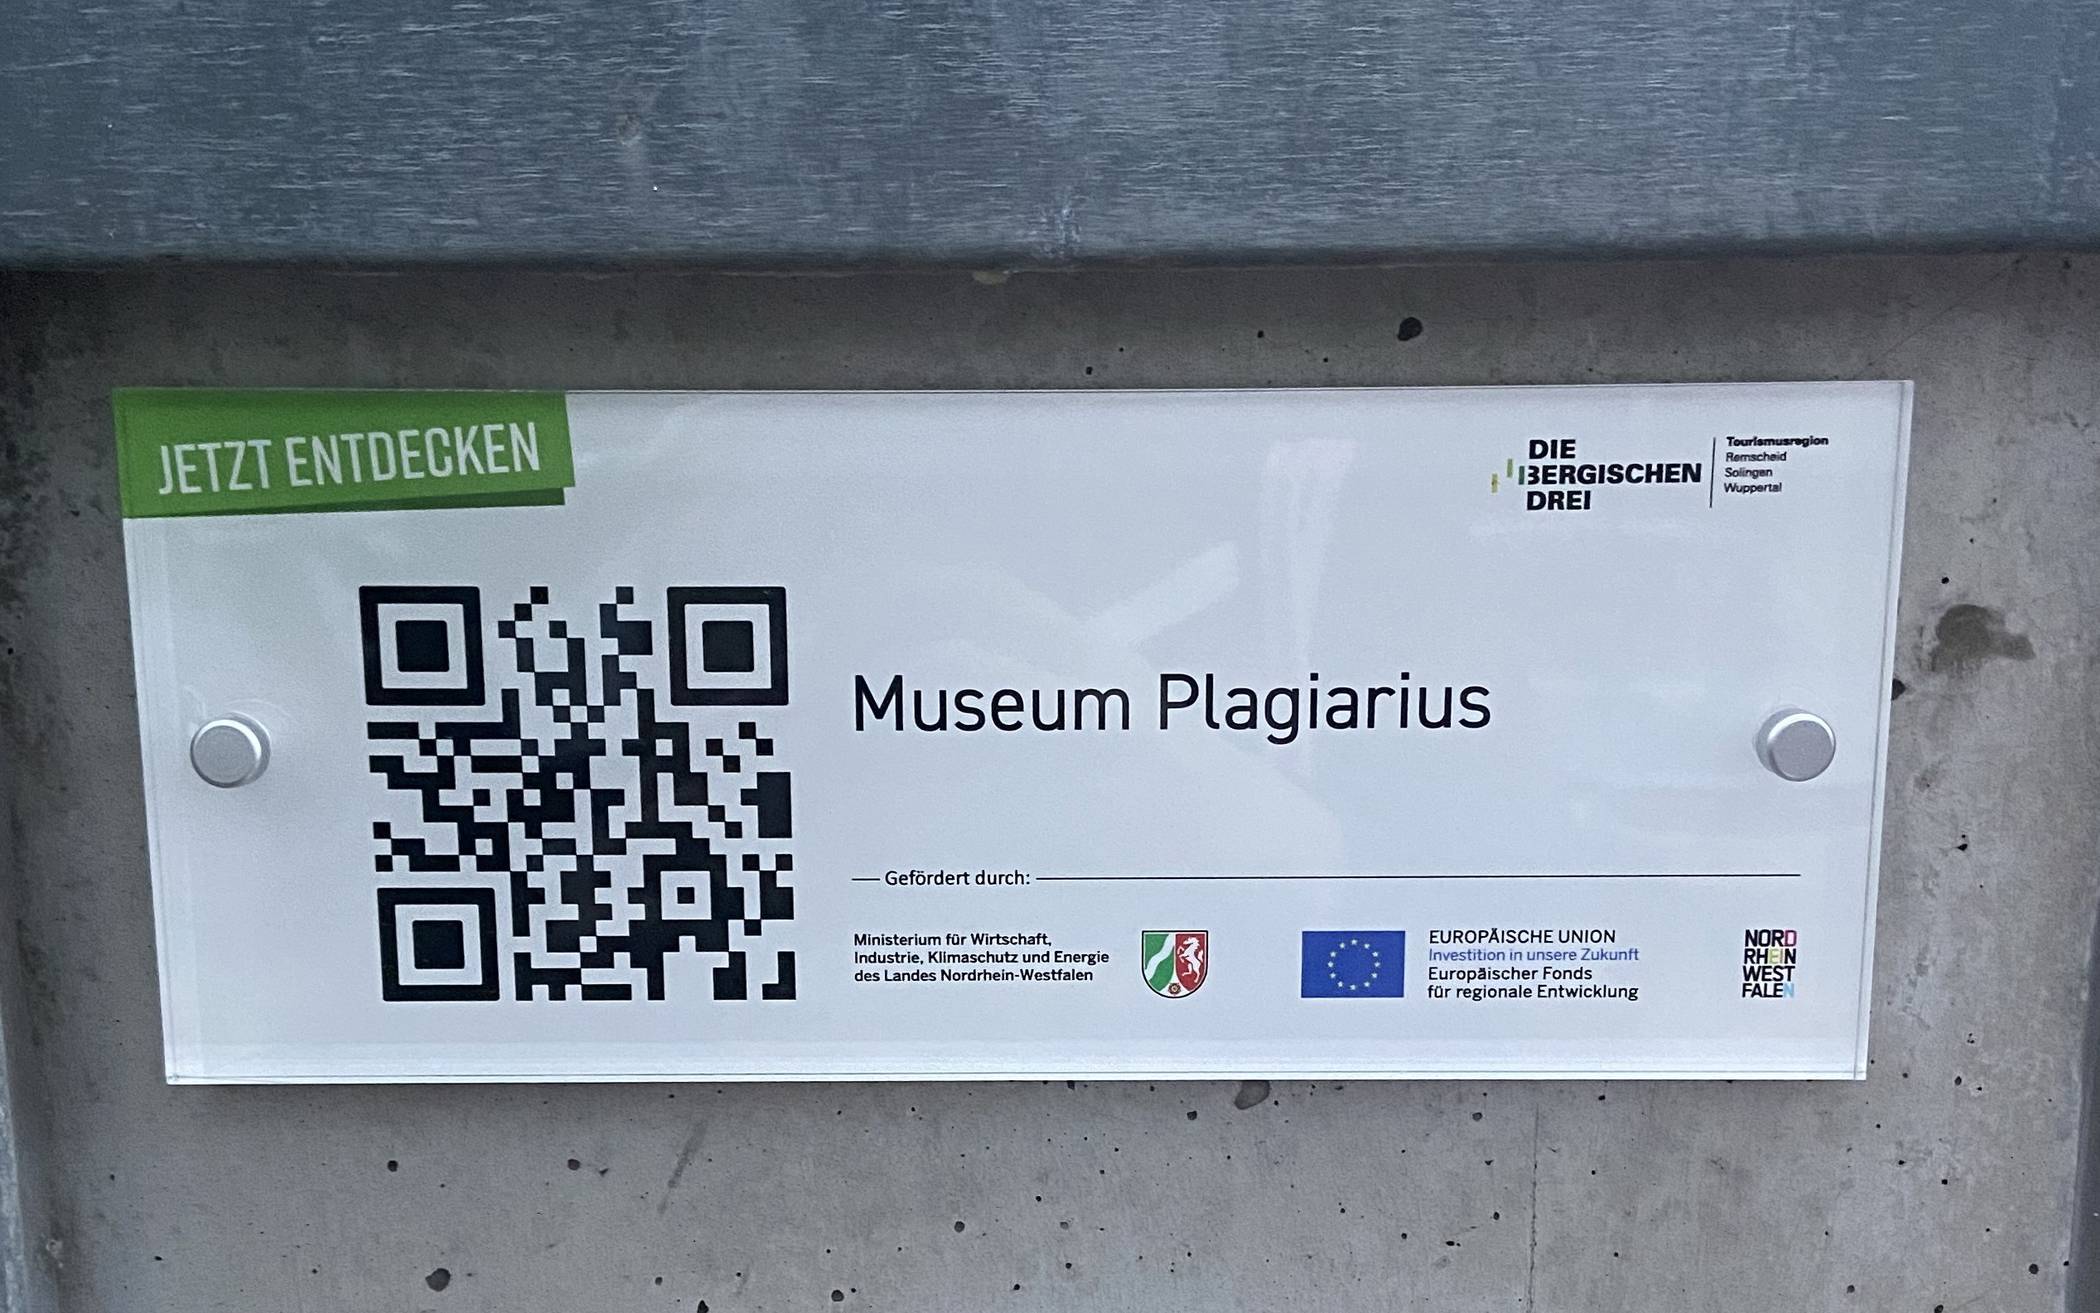  Der QR-Code für das Museum Plagiarius in Solingen. 